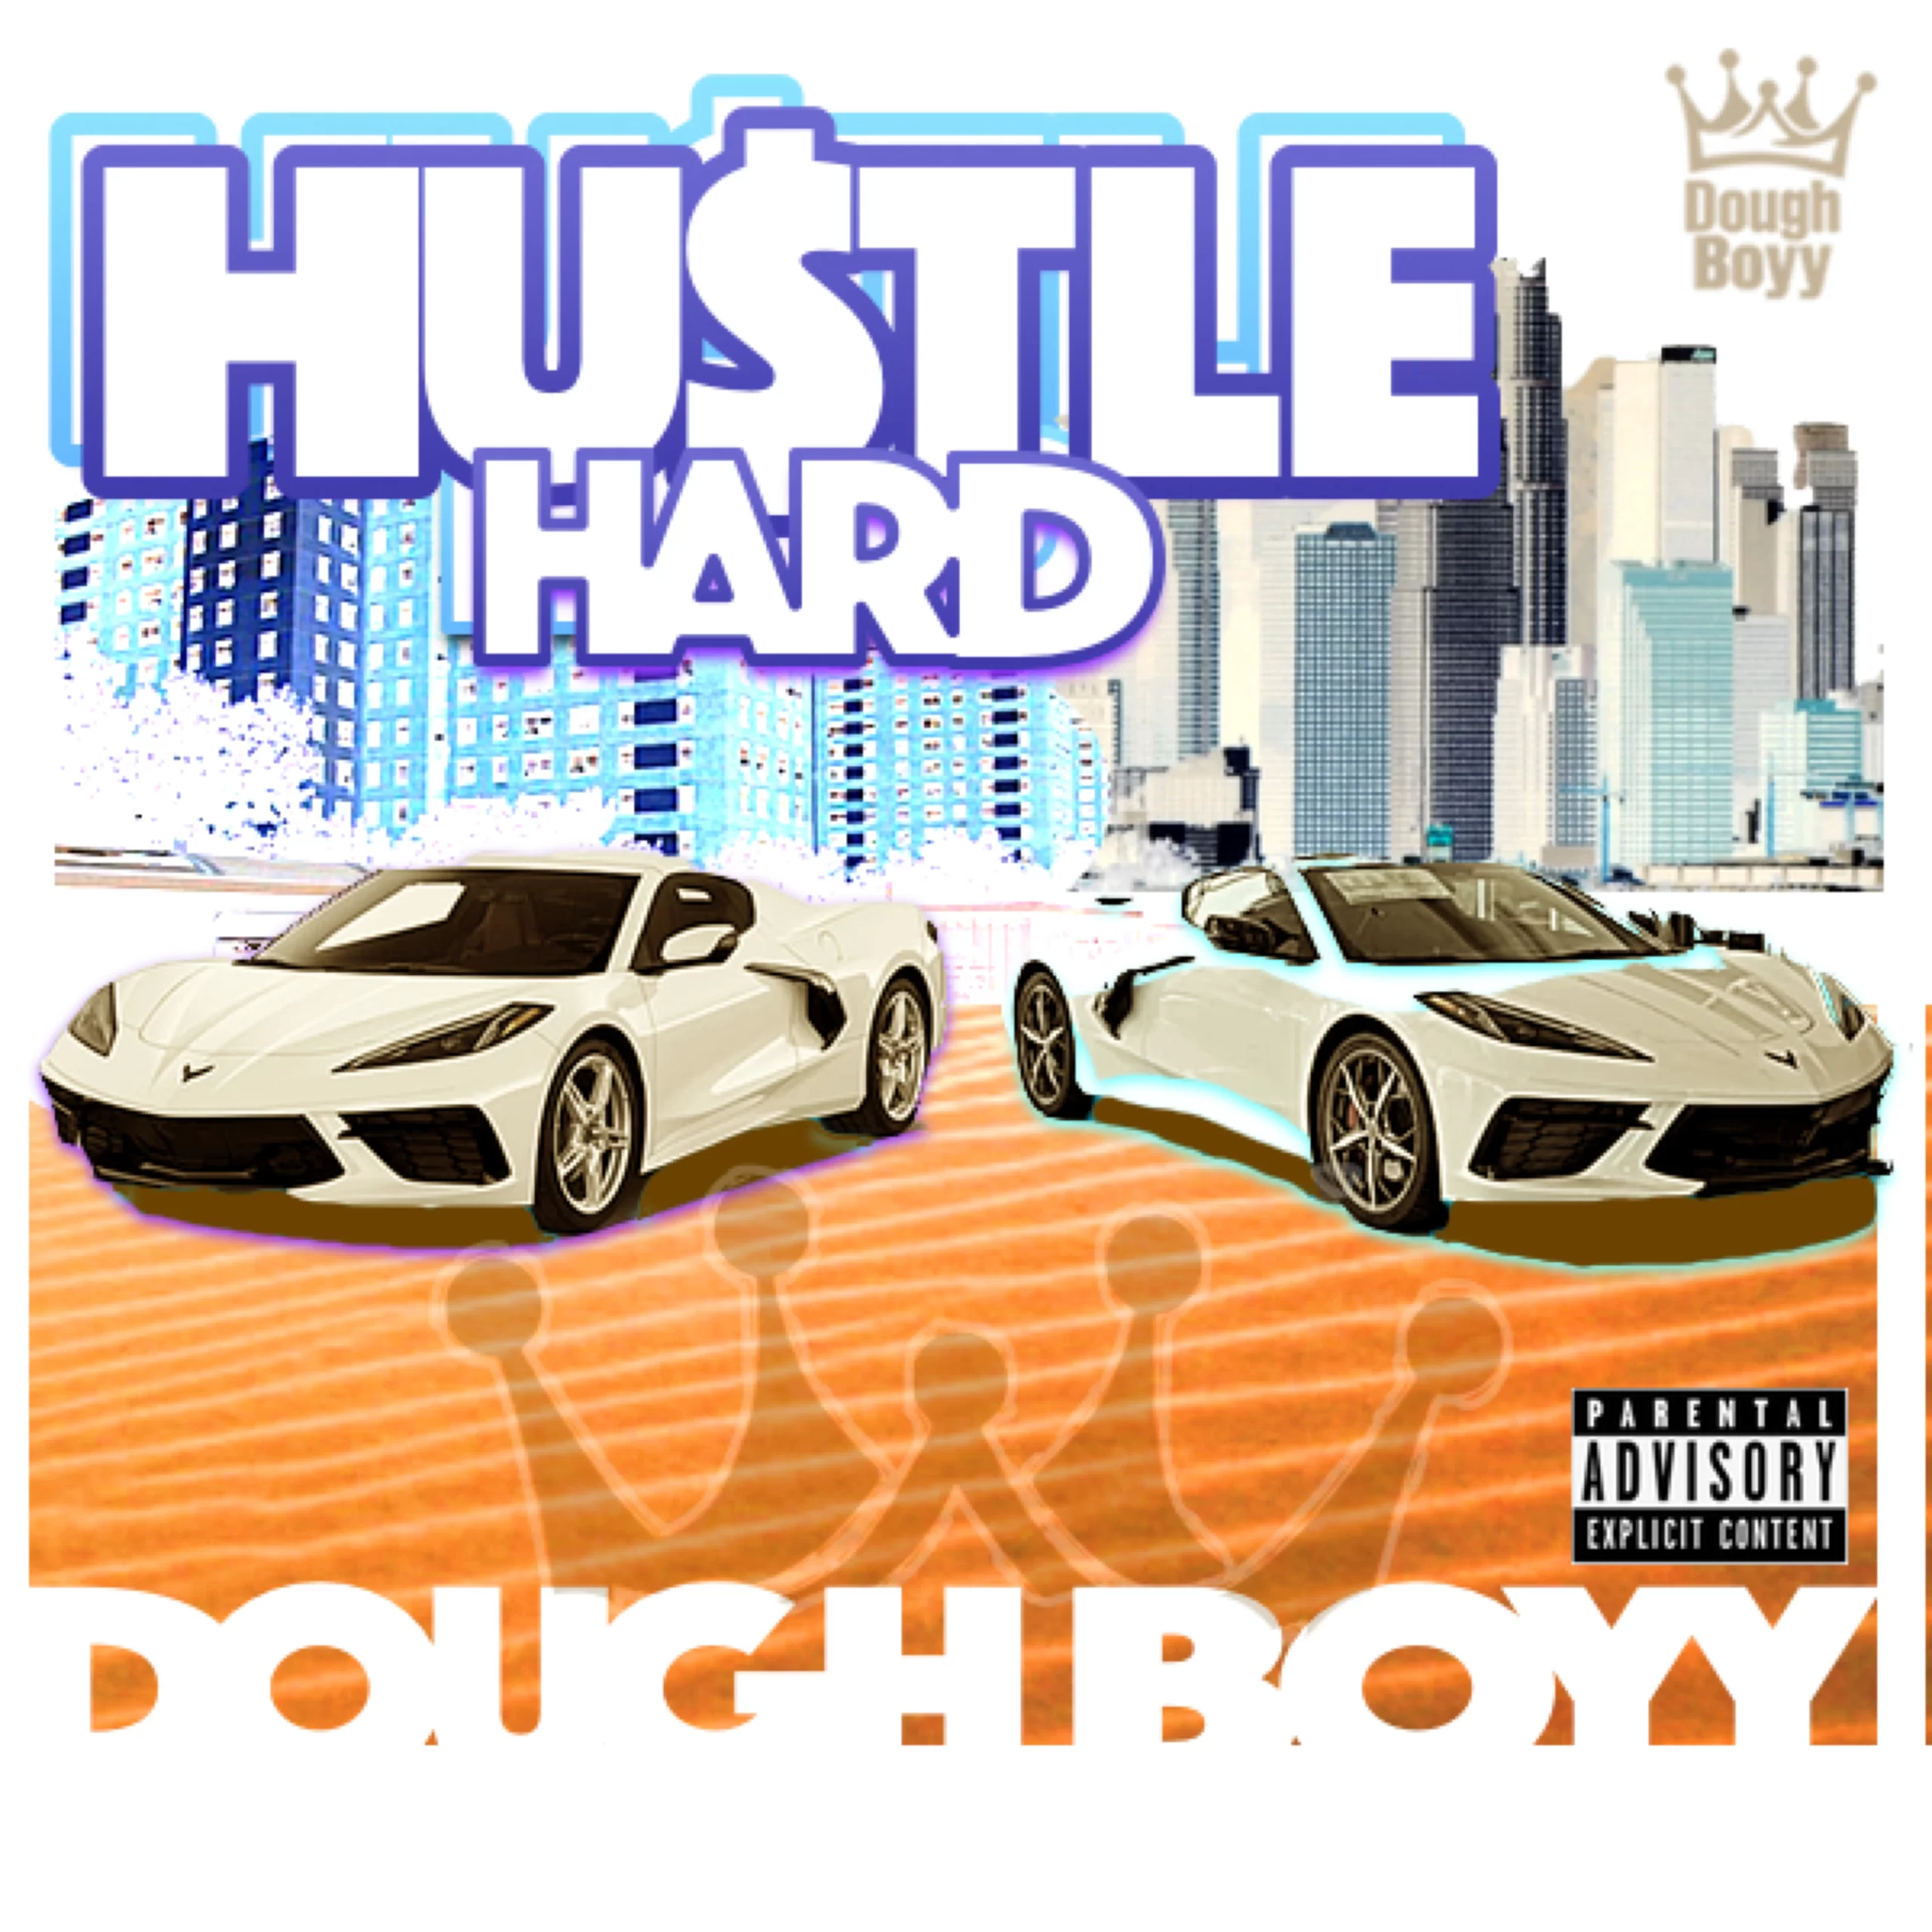 New Music: Dough Boyy – Hustle Hard